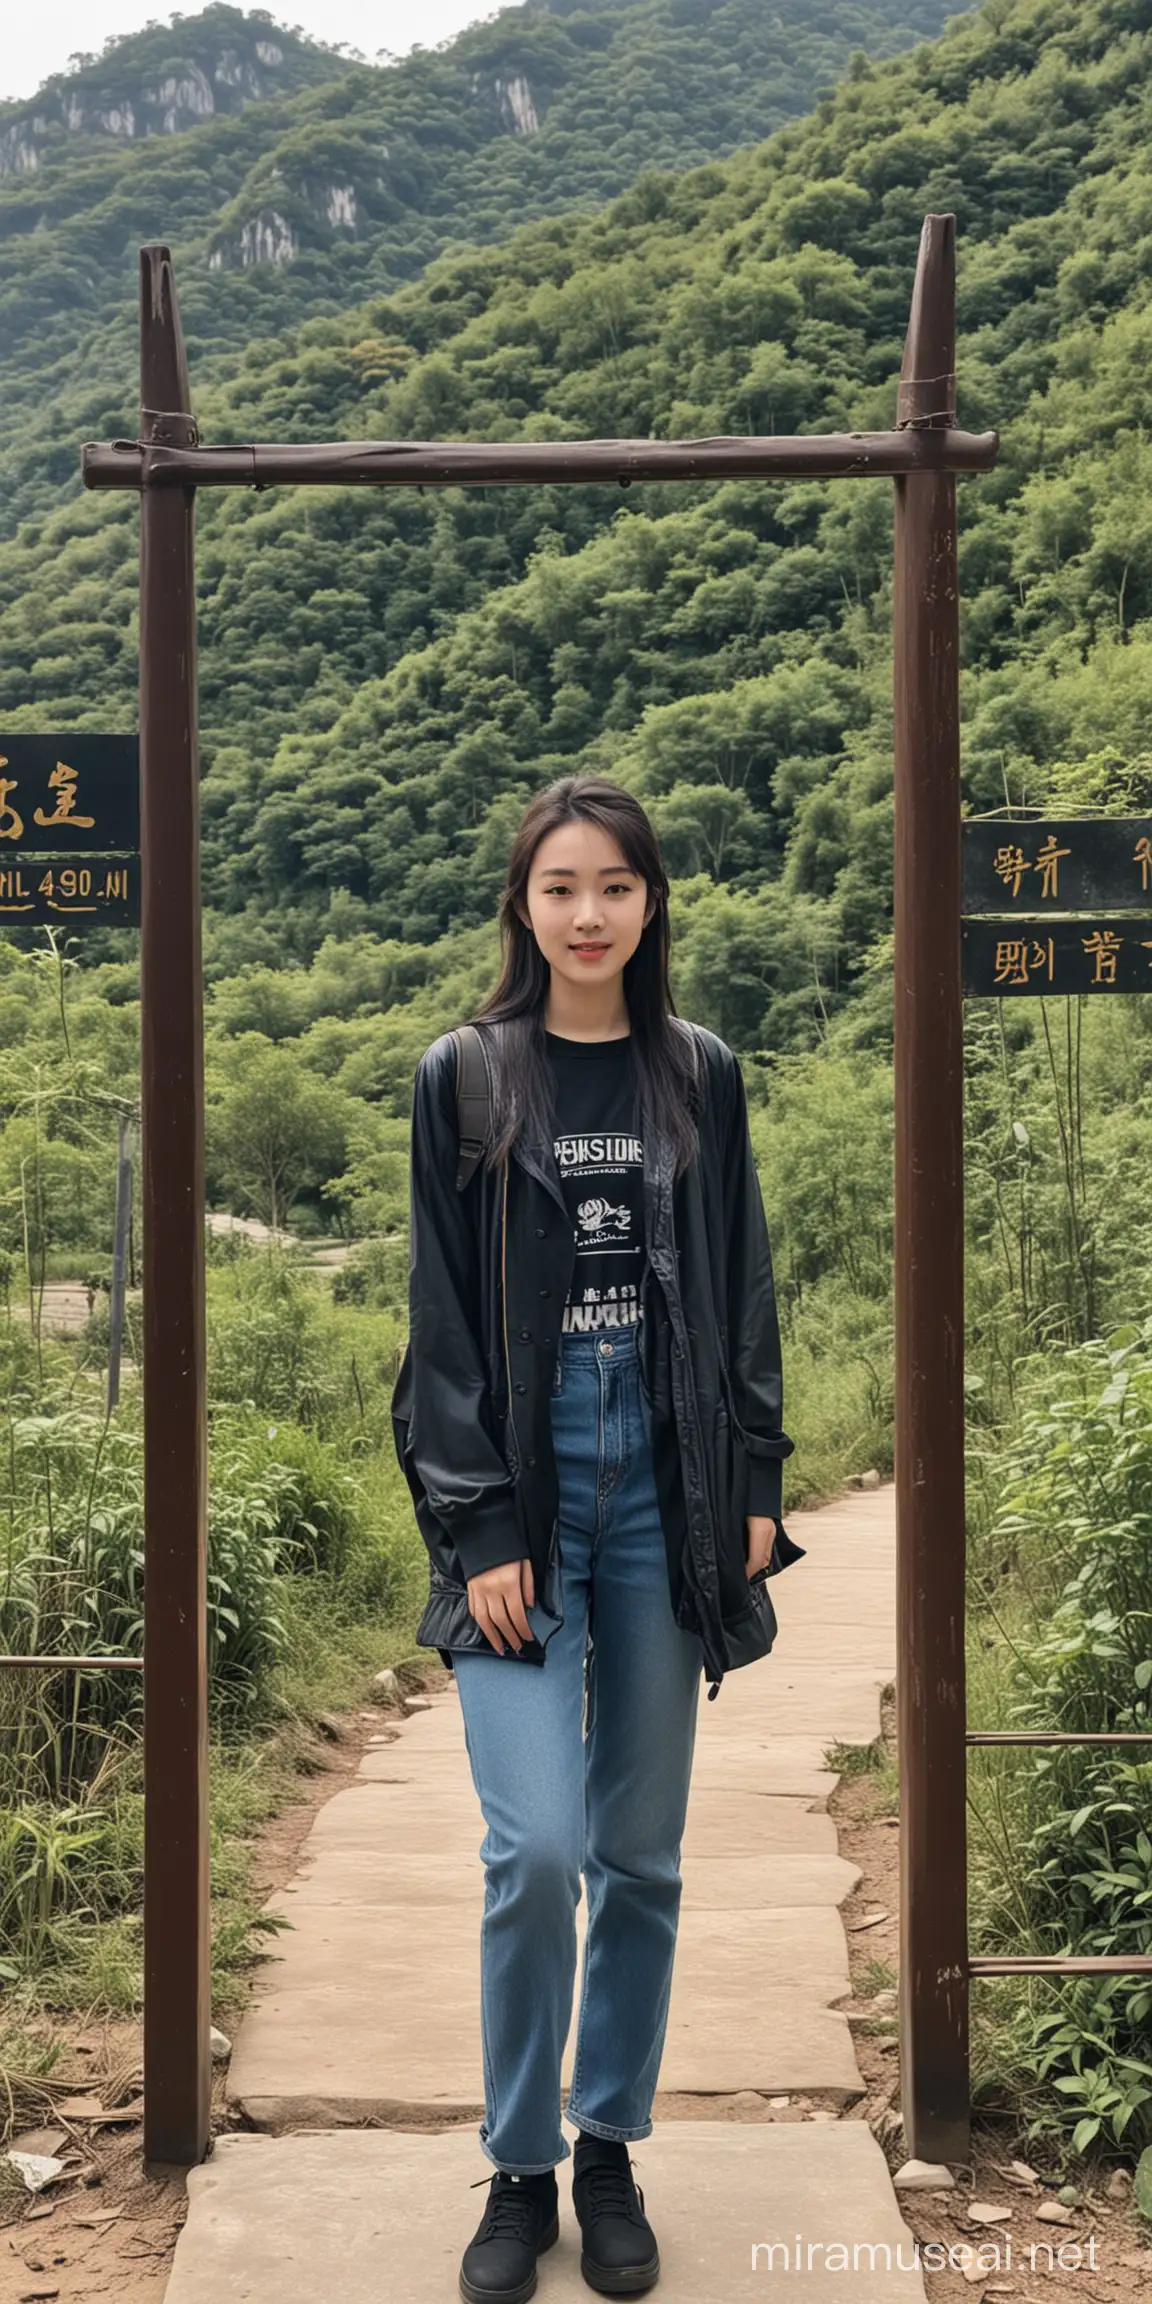 Youthful Chinese Teenage Traveler at Scenic Area Entrance